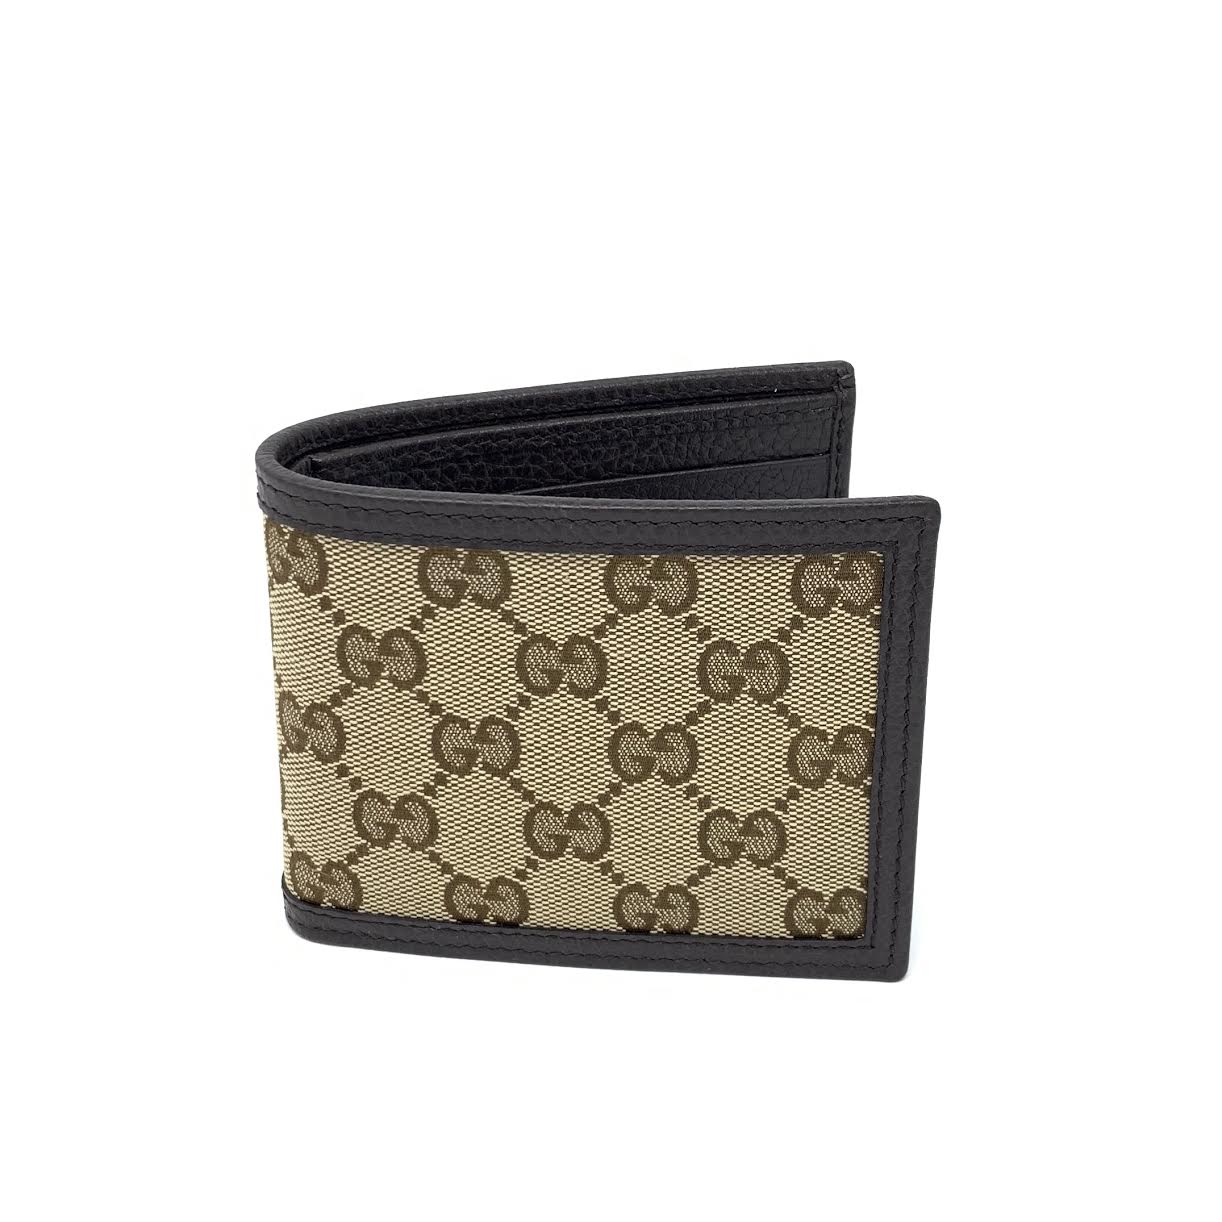 Gucci GG Canvas Bifold Wallet